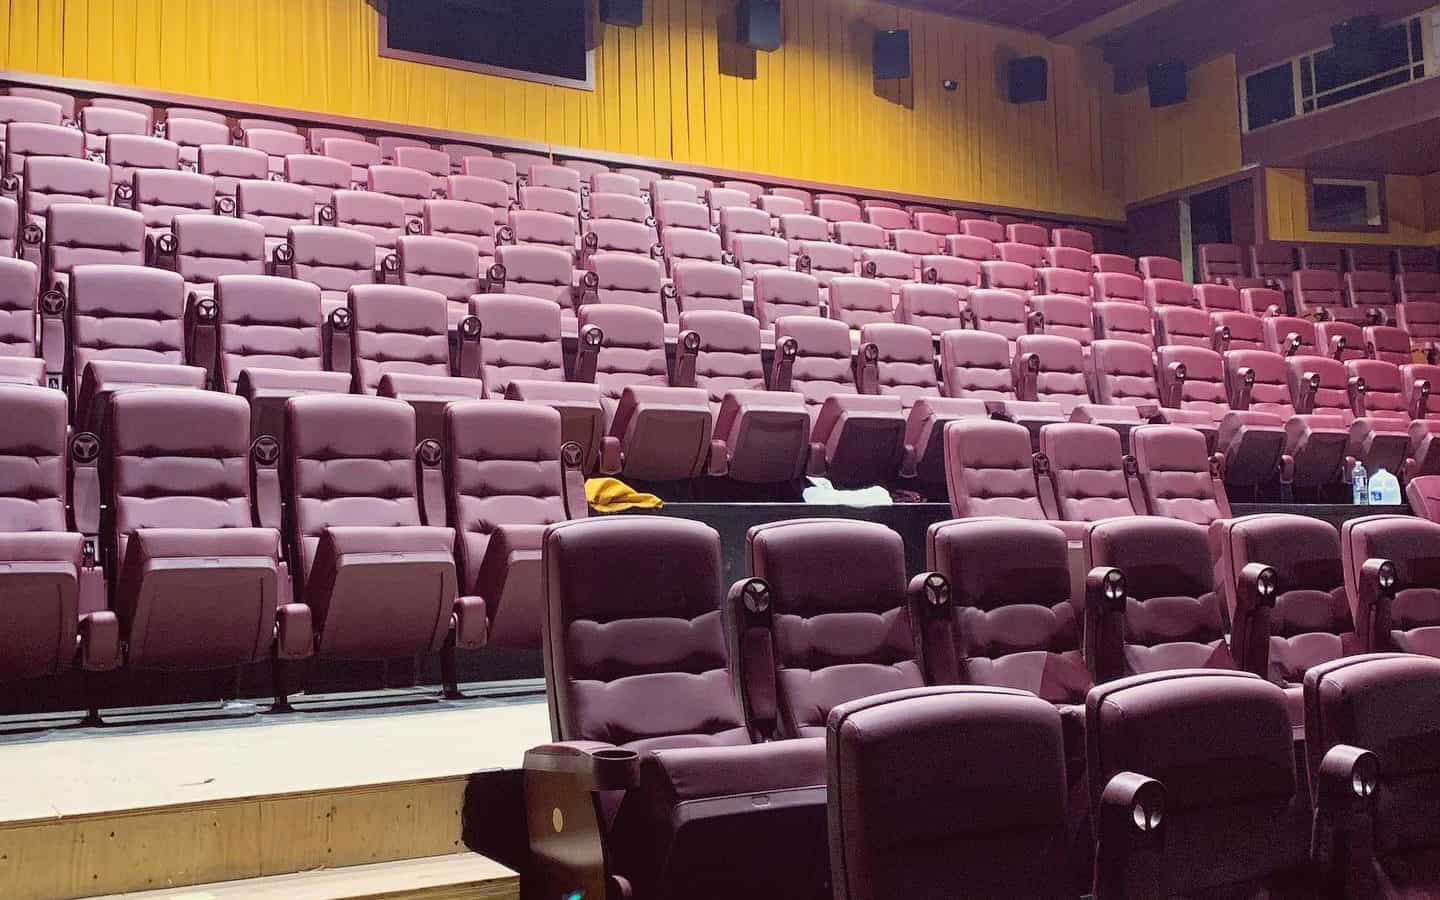 Rebuilt Ventnor Movie Theater Open by Holiday Season 2020? - Downbeach BUZZ